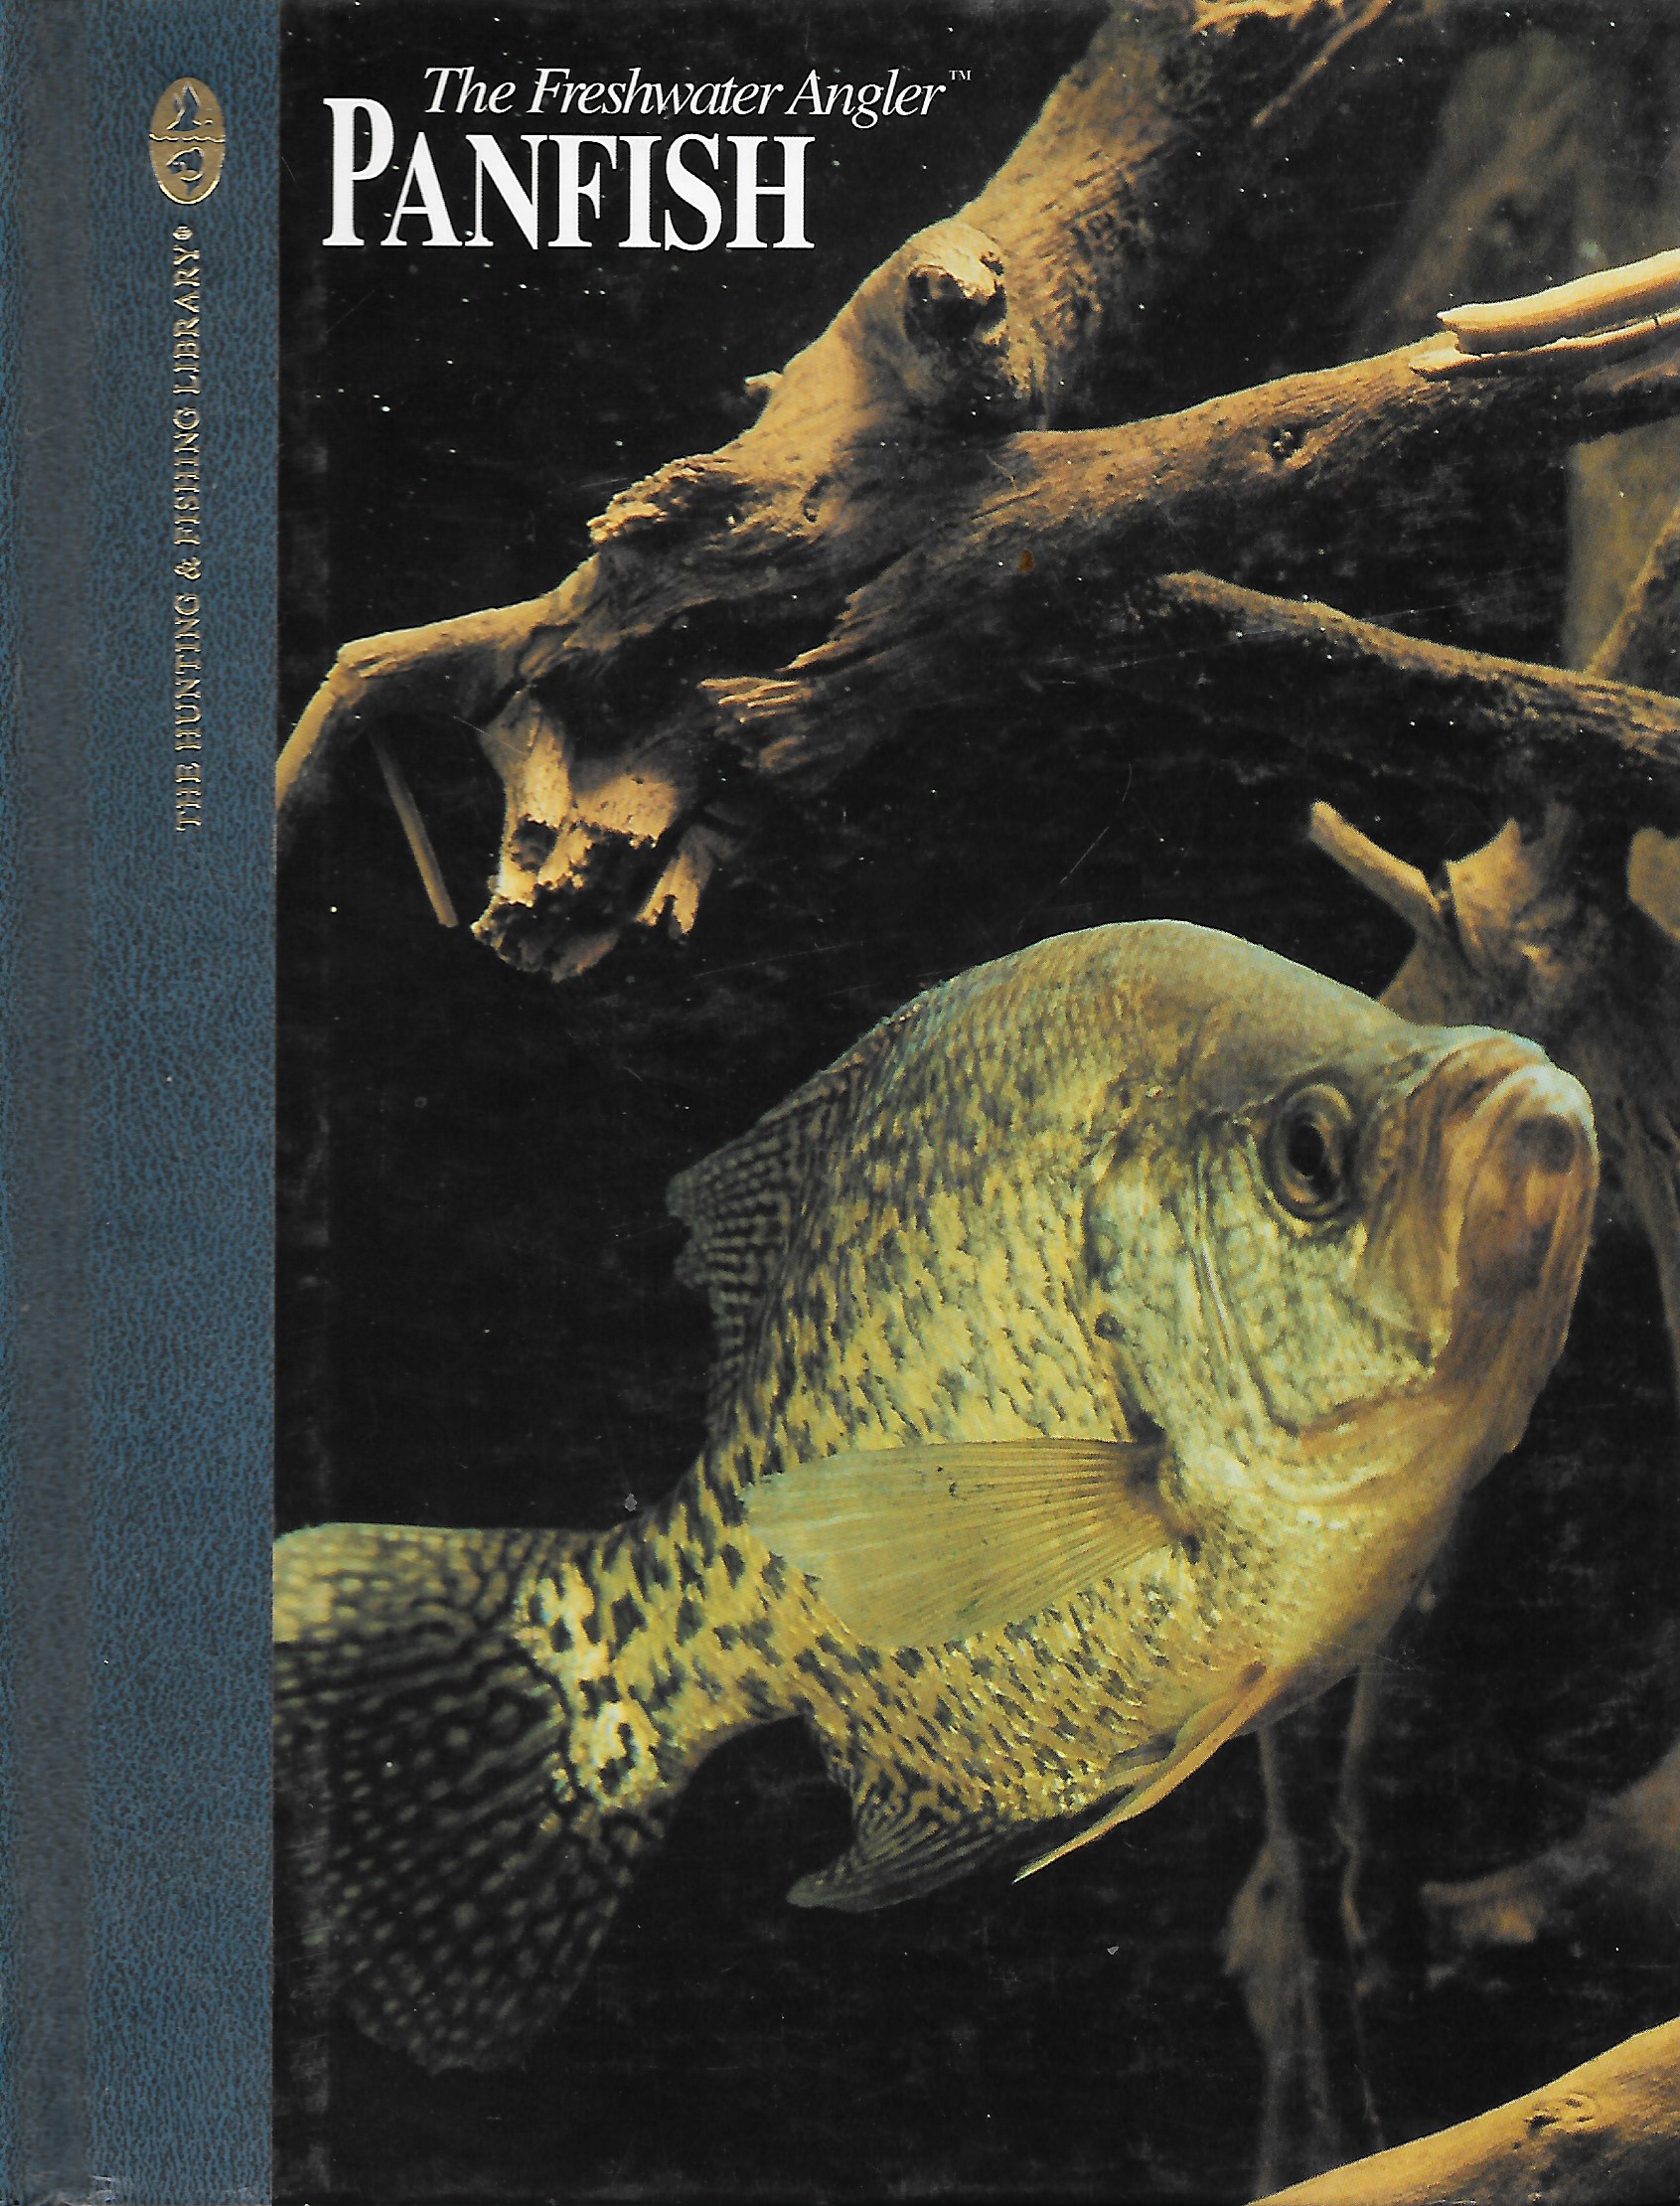 Panfish by Dick Sternberg